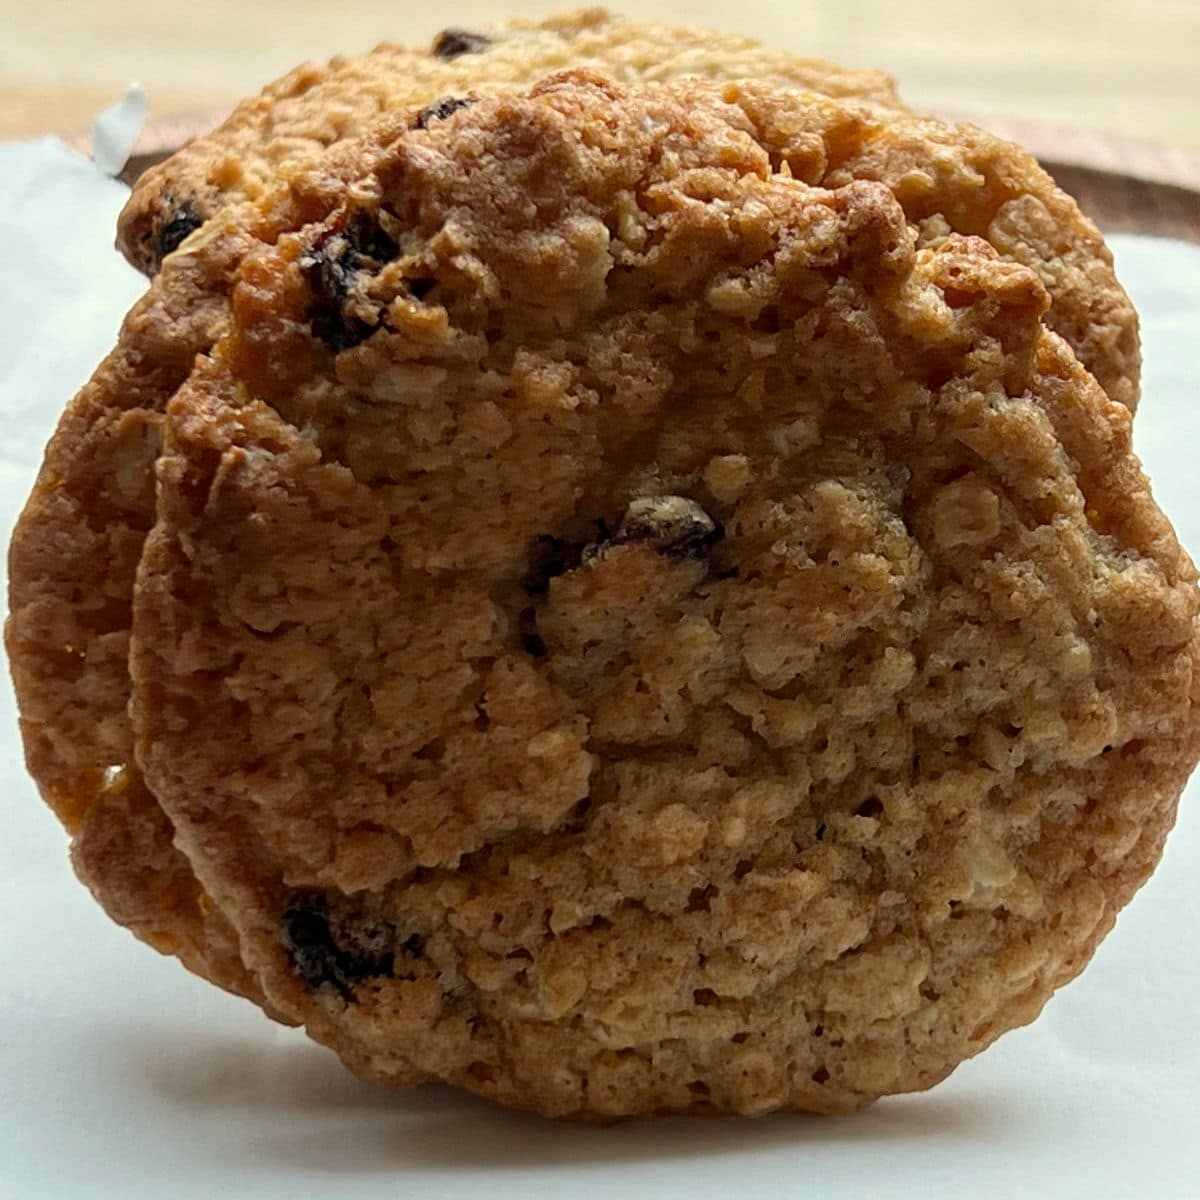 Whole oatmeal raisin cookie on its side.